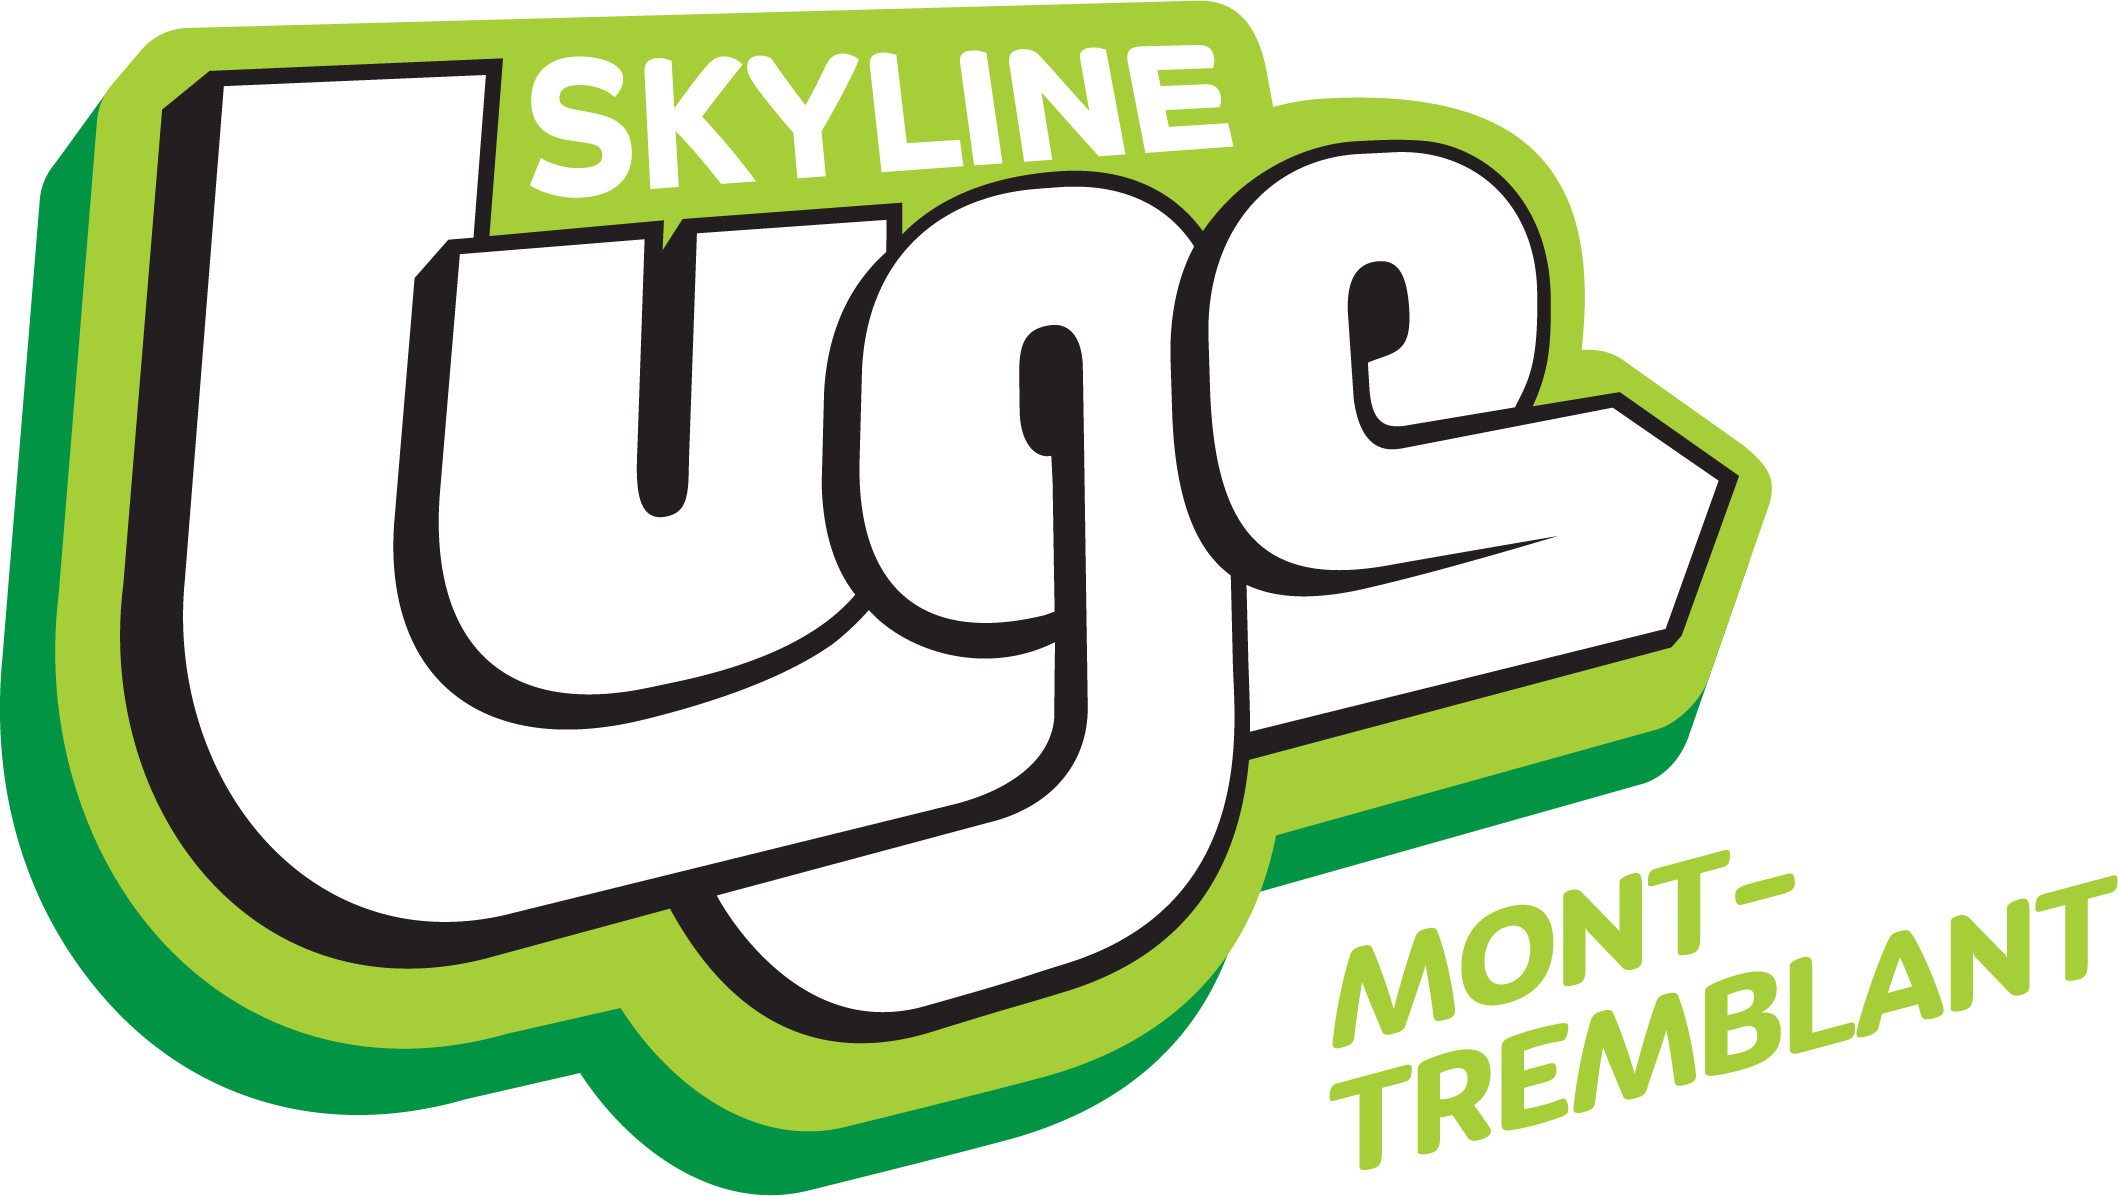 Skyline Luge Mont Tremblant Green RGB